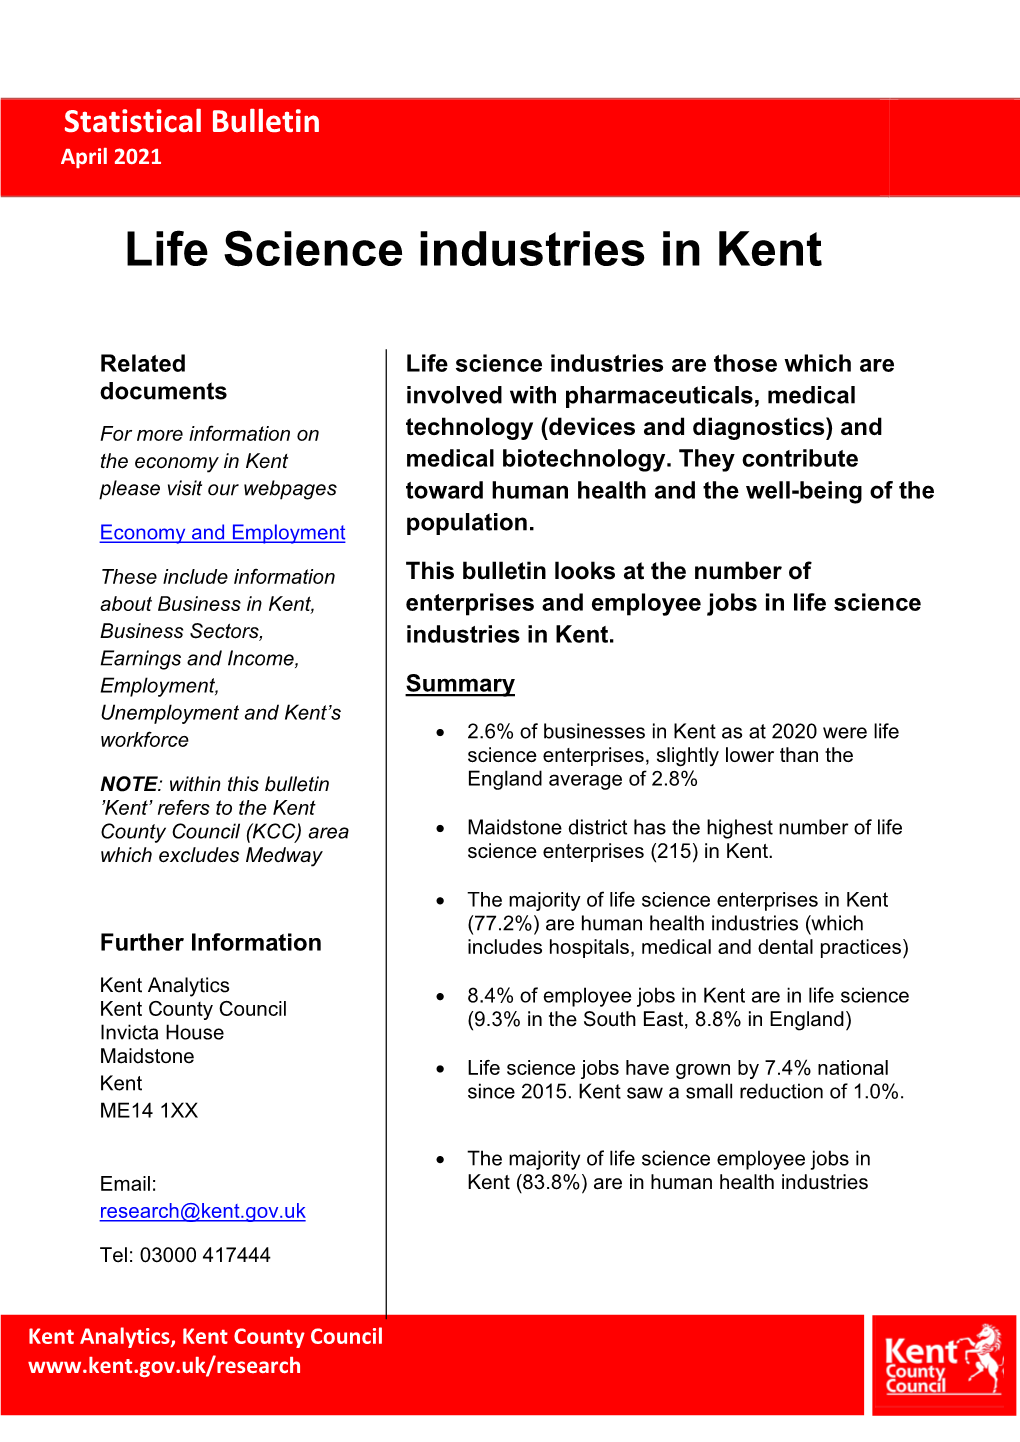 Life Sciences Industry Report